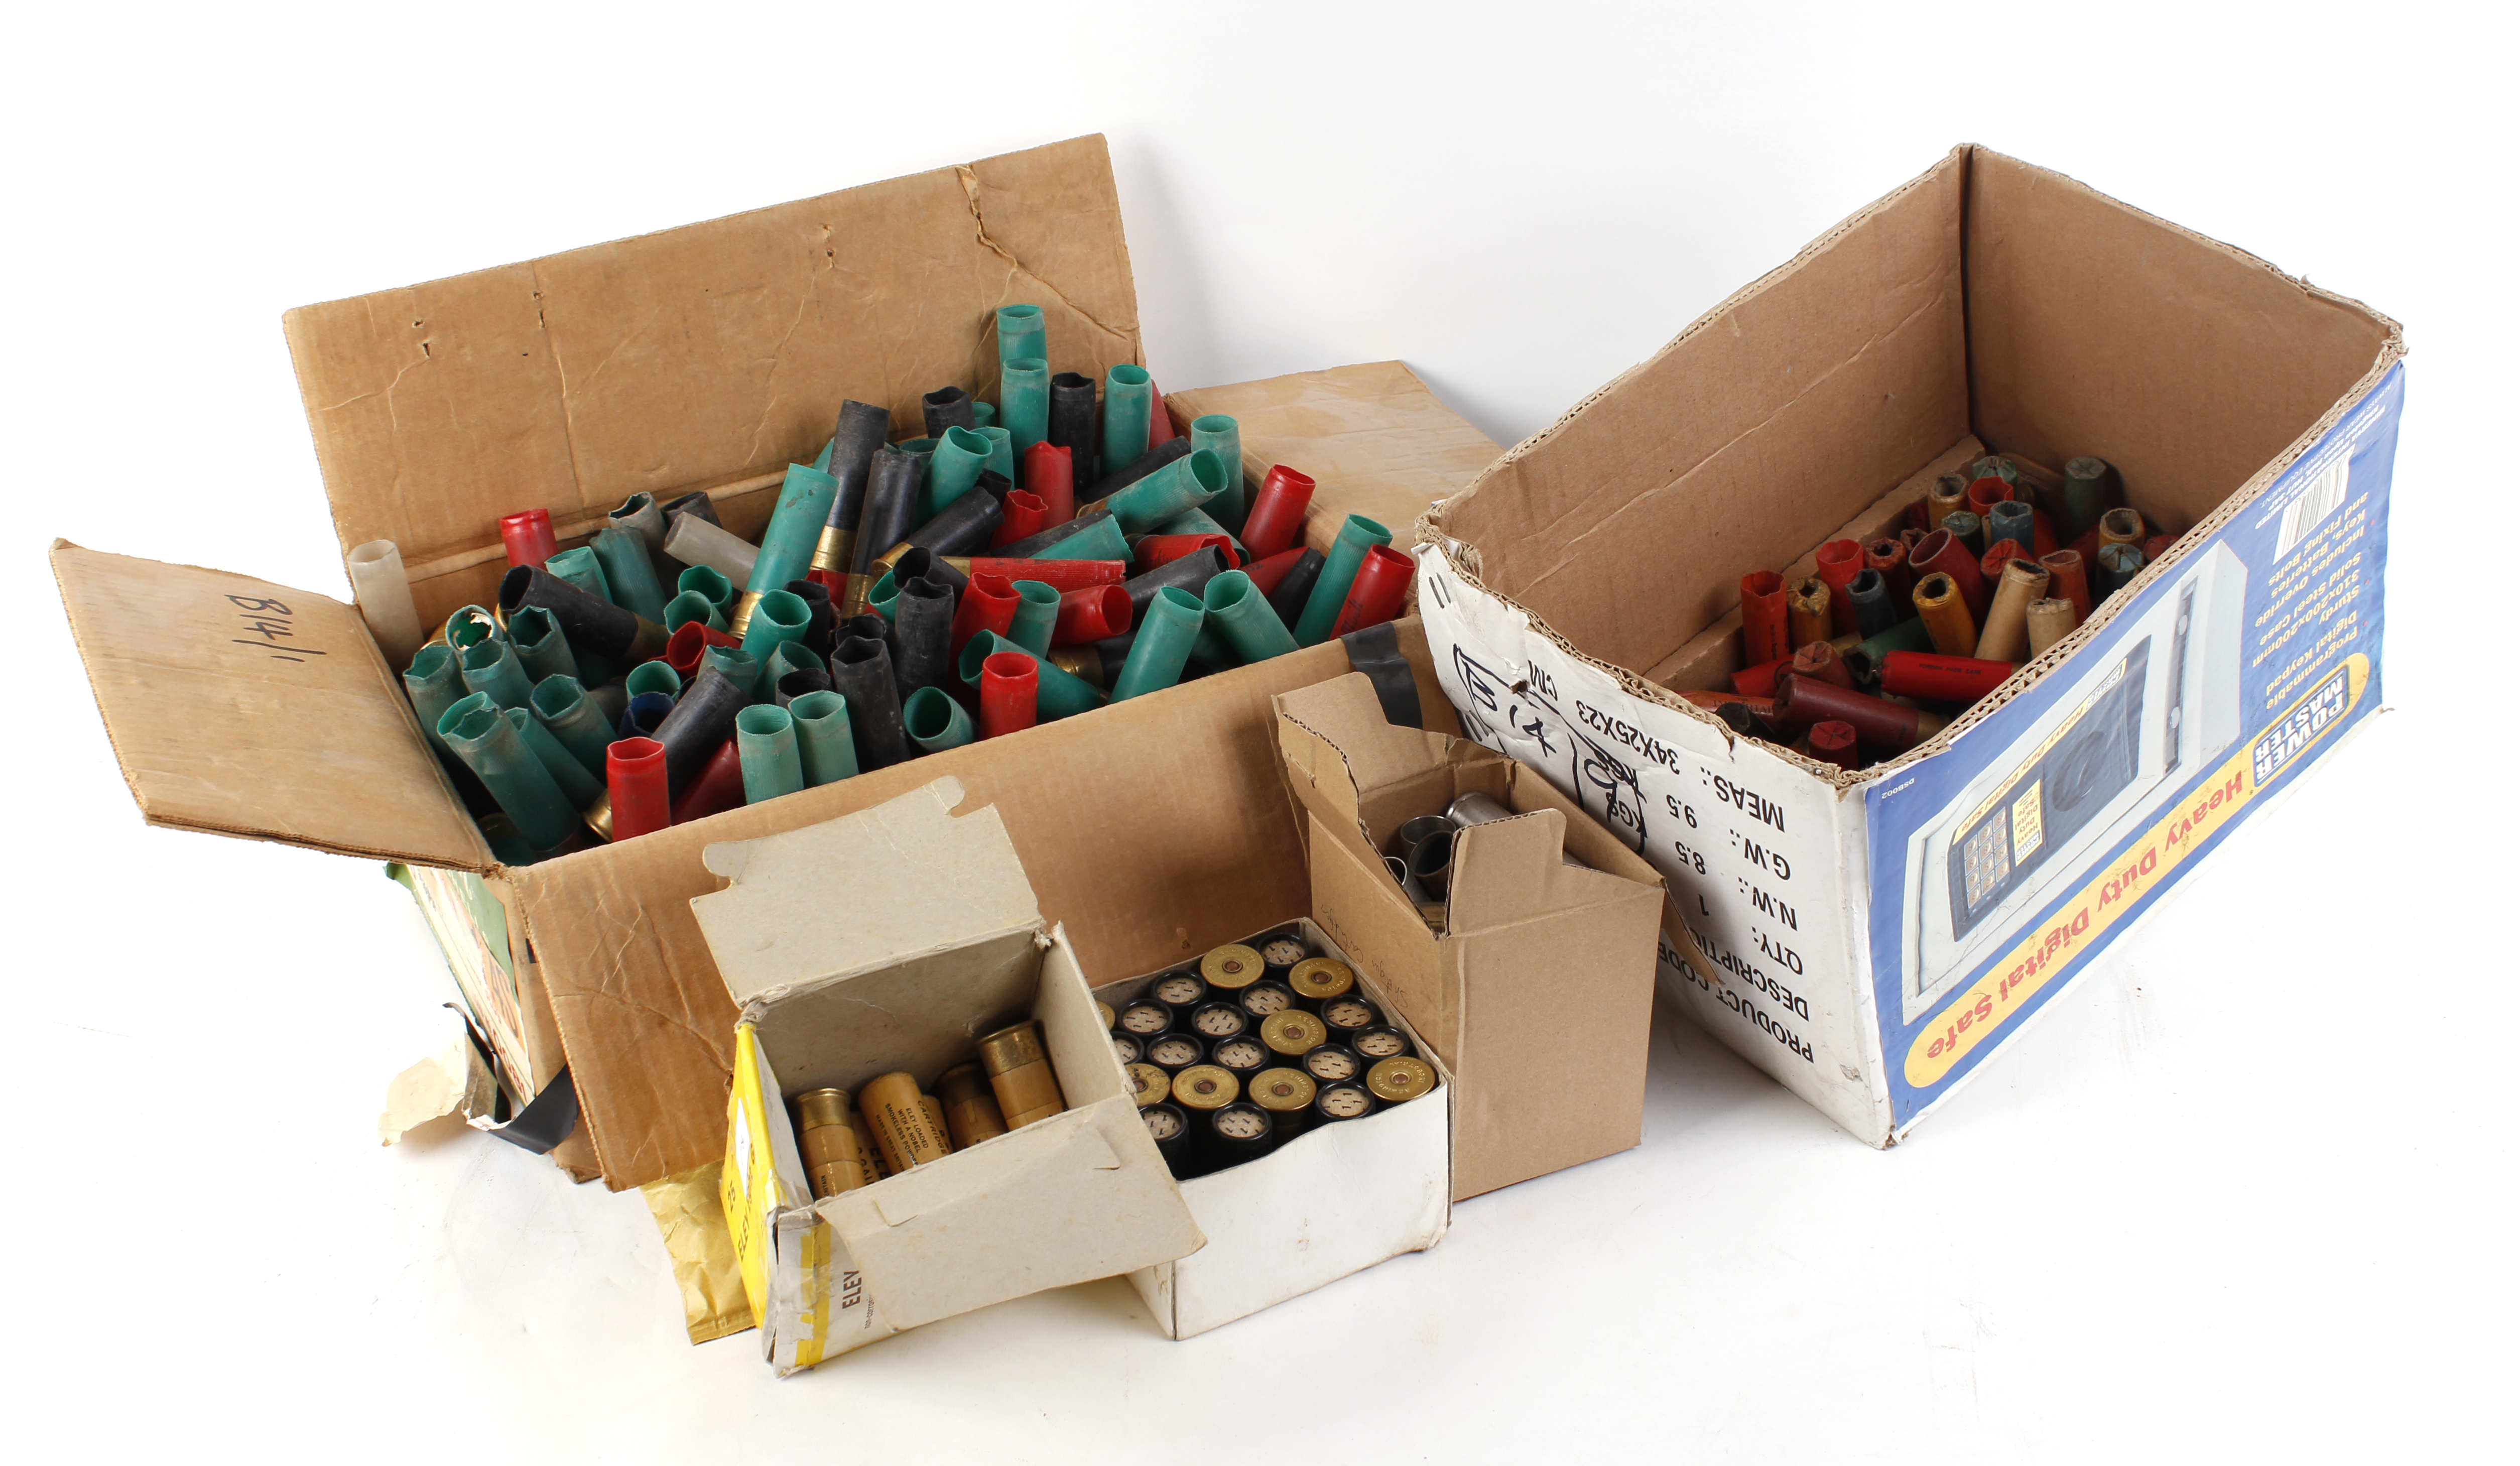 14 x 8 bore Eley cartridges; 22 x 8 bore Max Mag cartridges; 11 x 8 bore brass & steel cases;